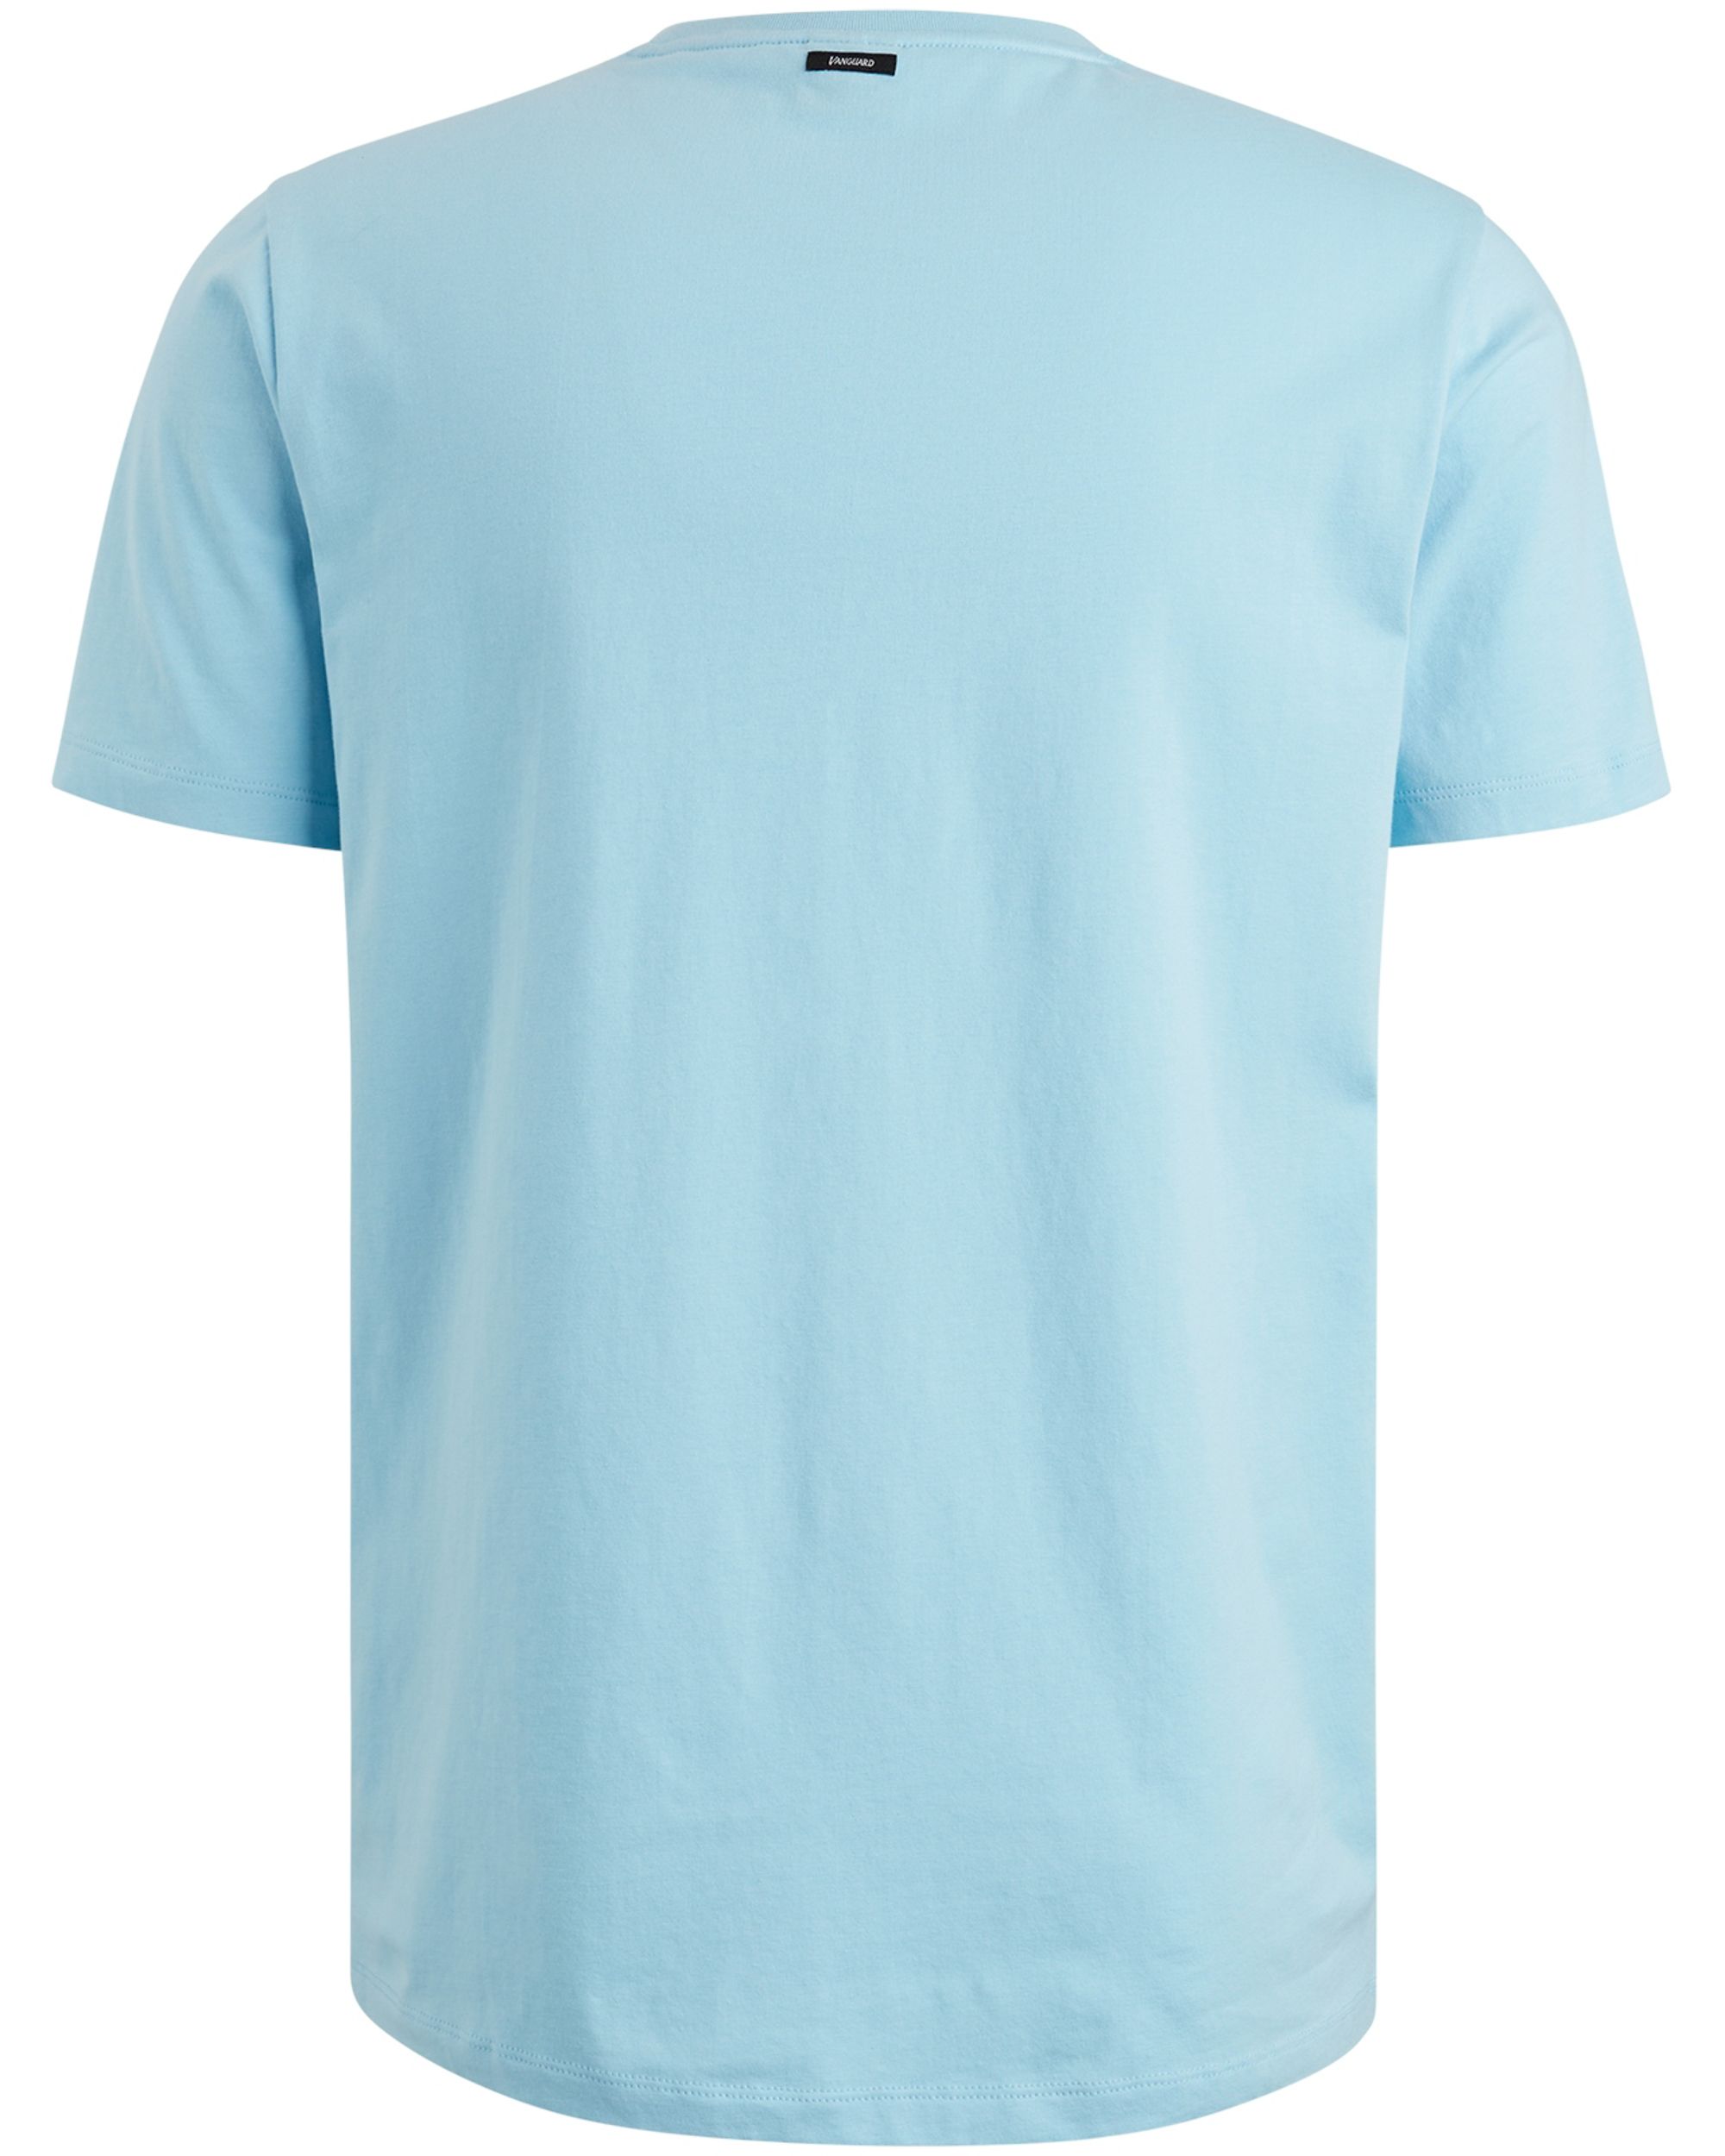 Vanguard T-shirt KM Licht blauw 093701-001-L